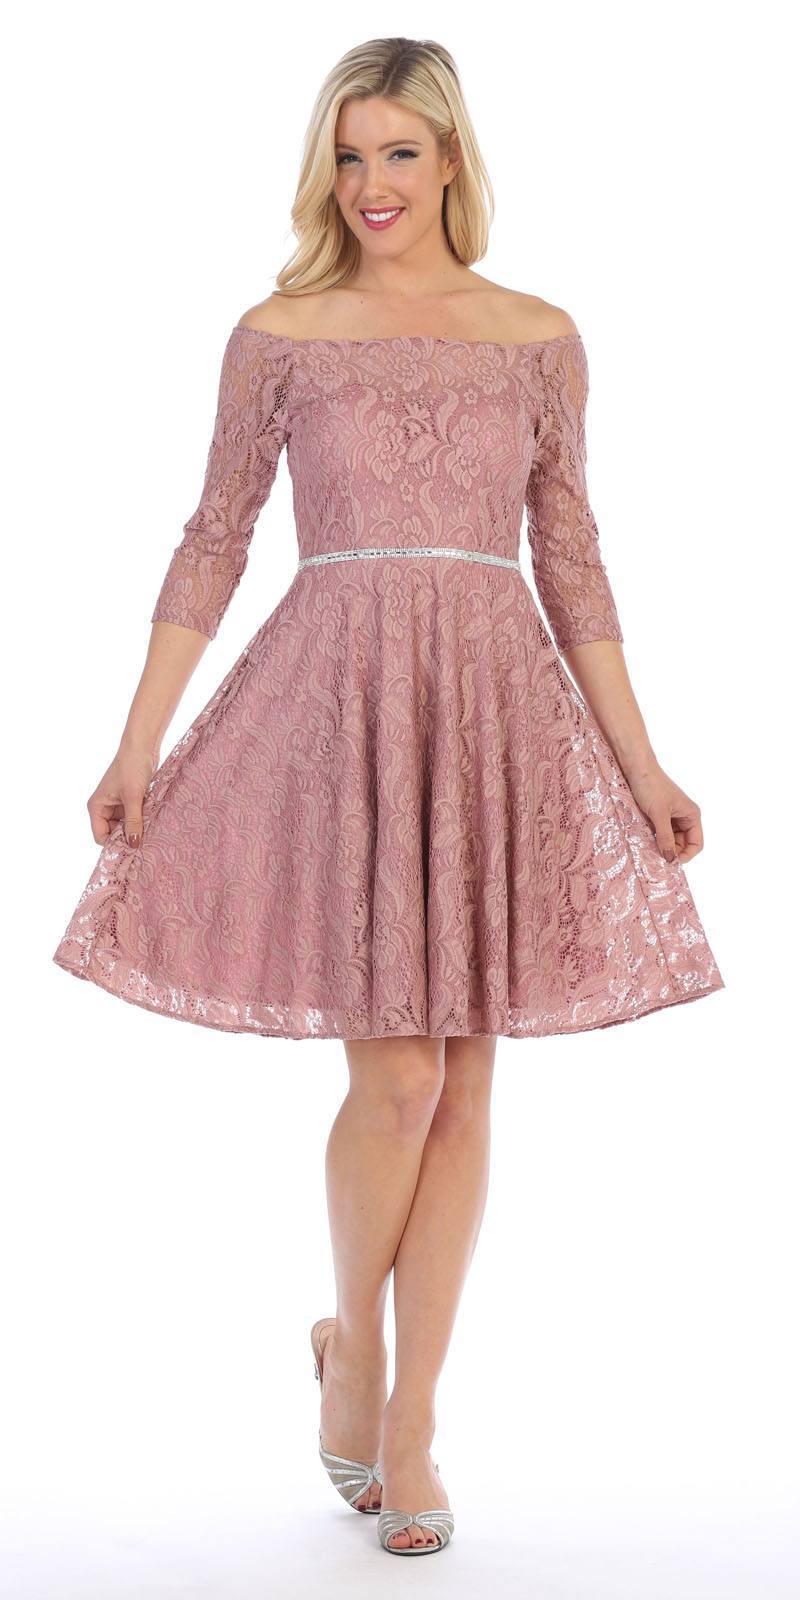 Celavie 6343 Off-the-Shoulder Short Lace Homecoming Dress Mauve